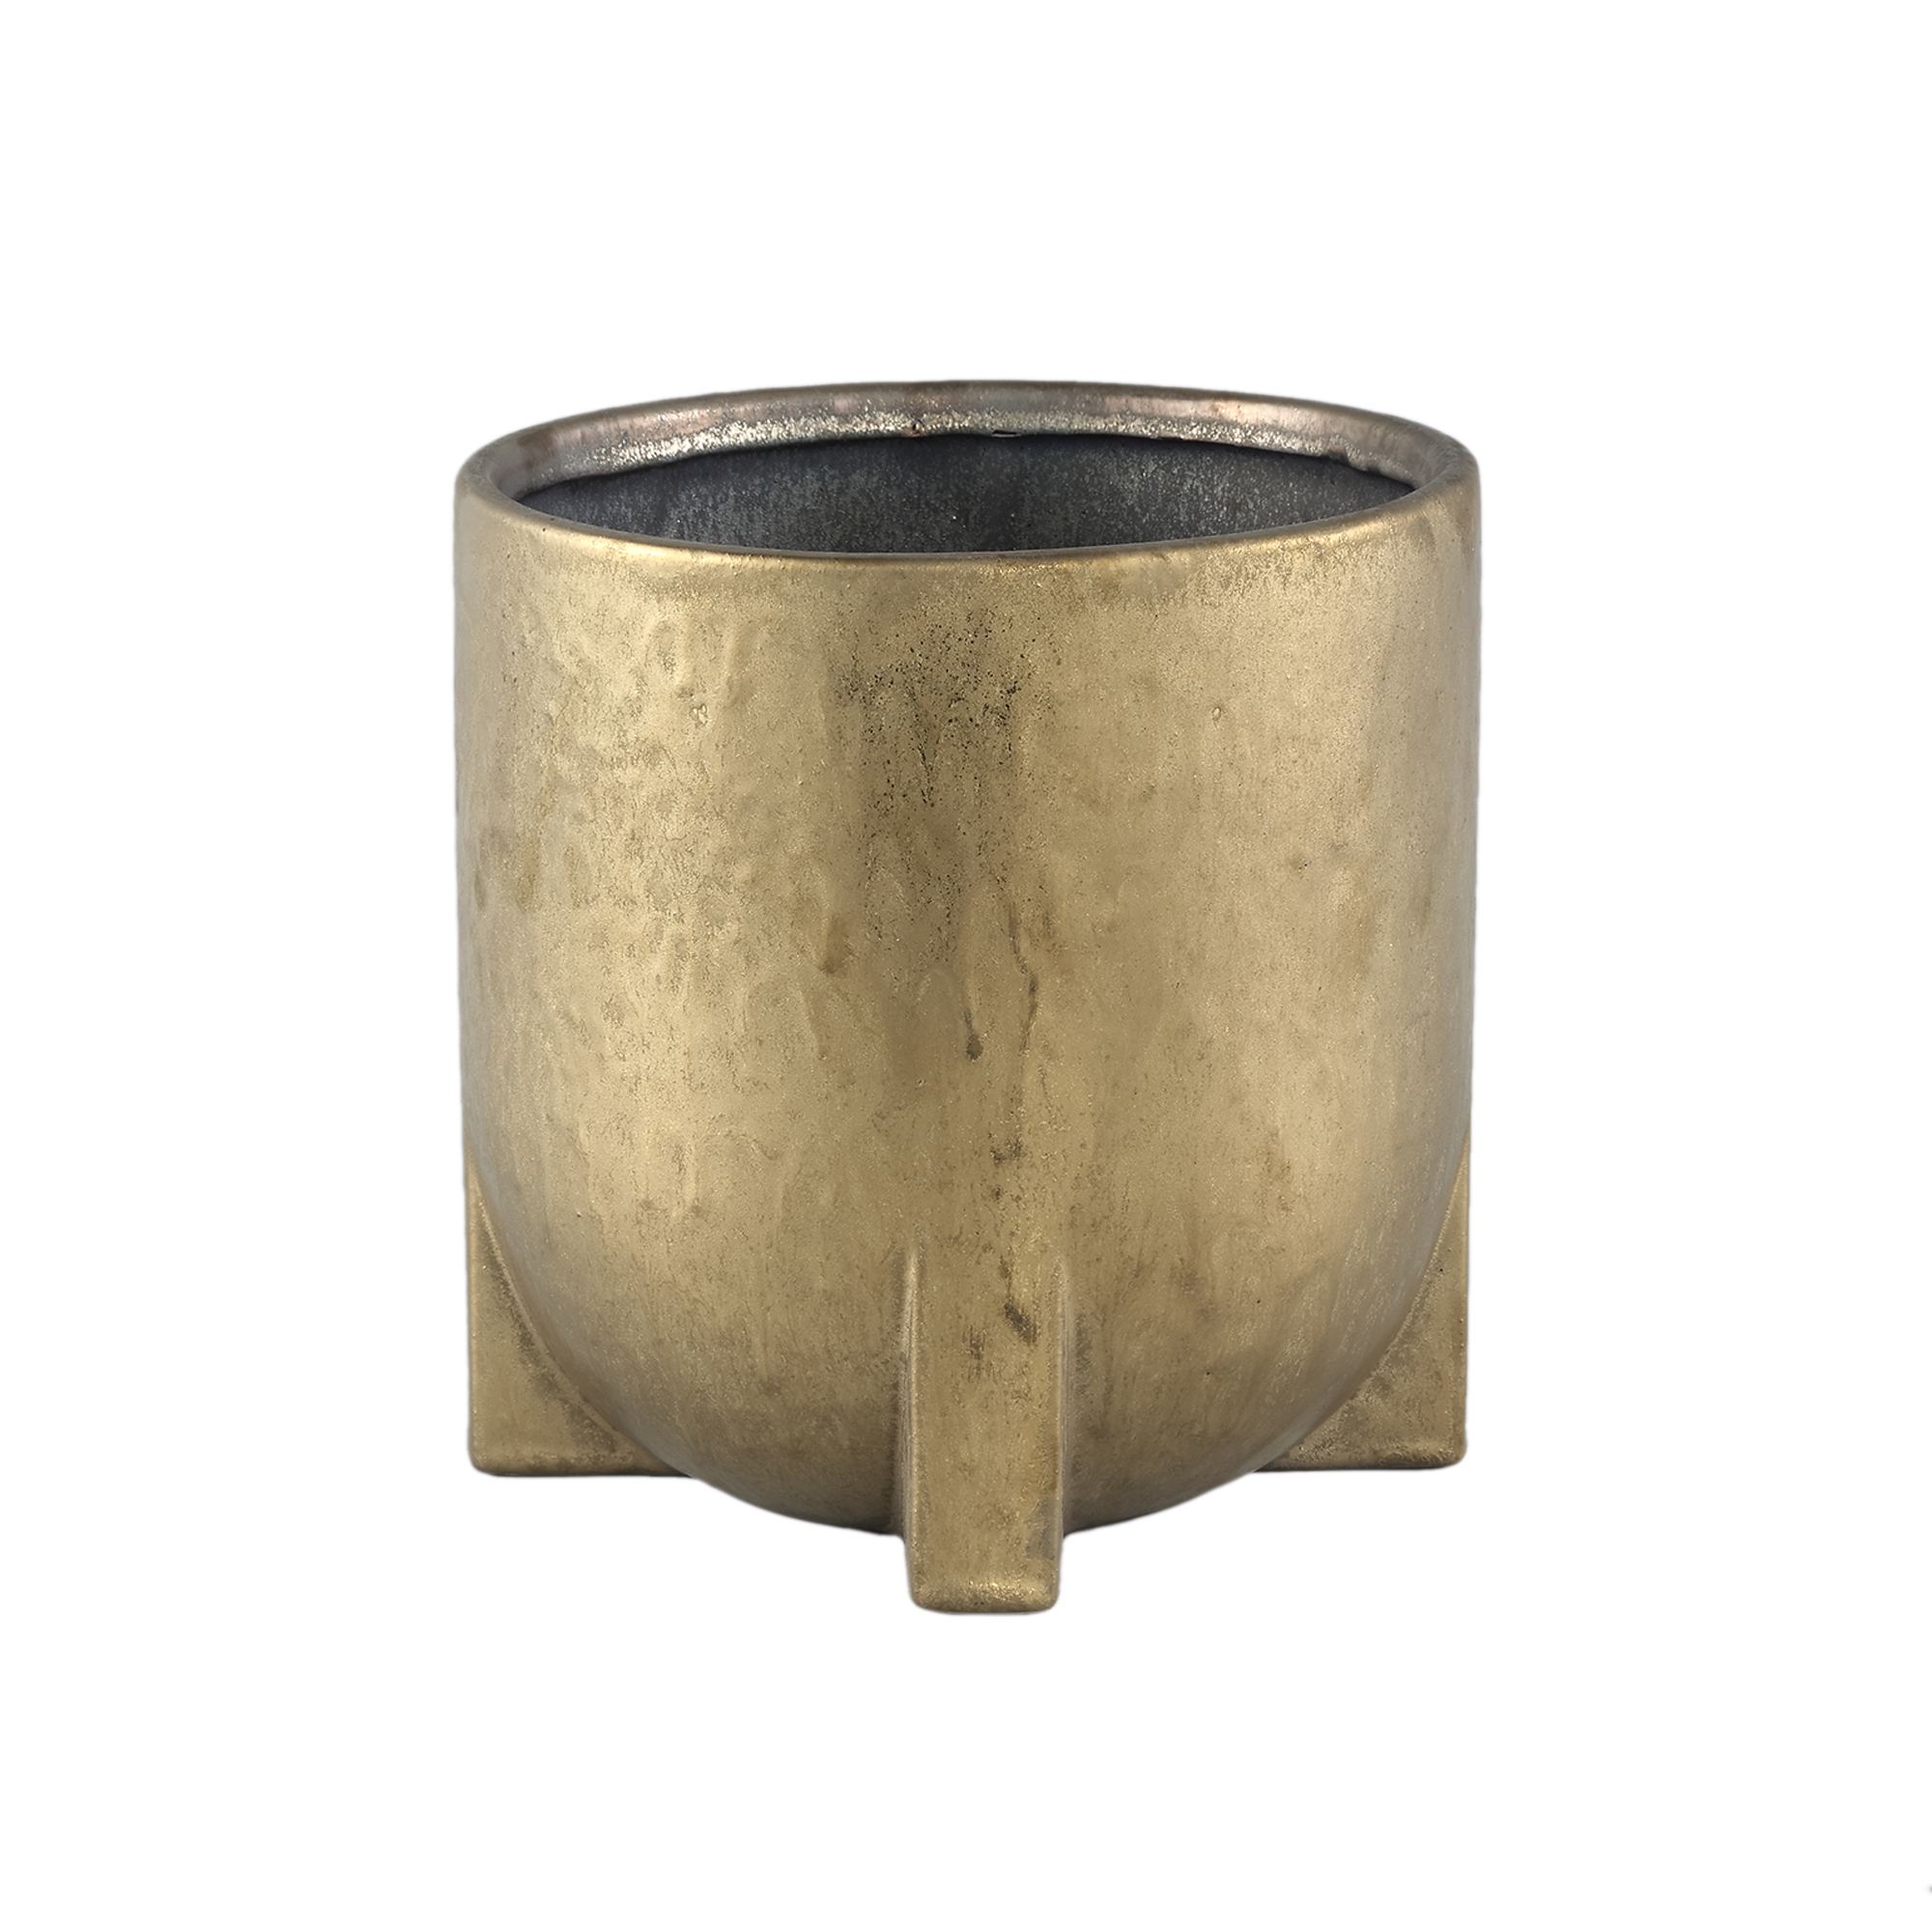 Mardix Gold ceramic pot small feet round low XL